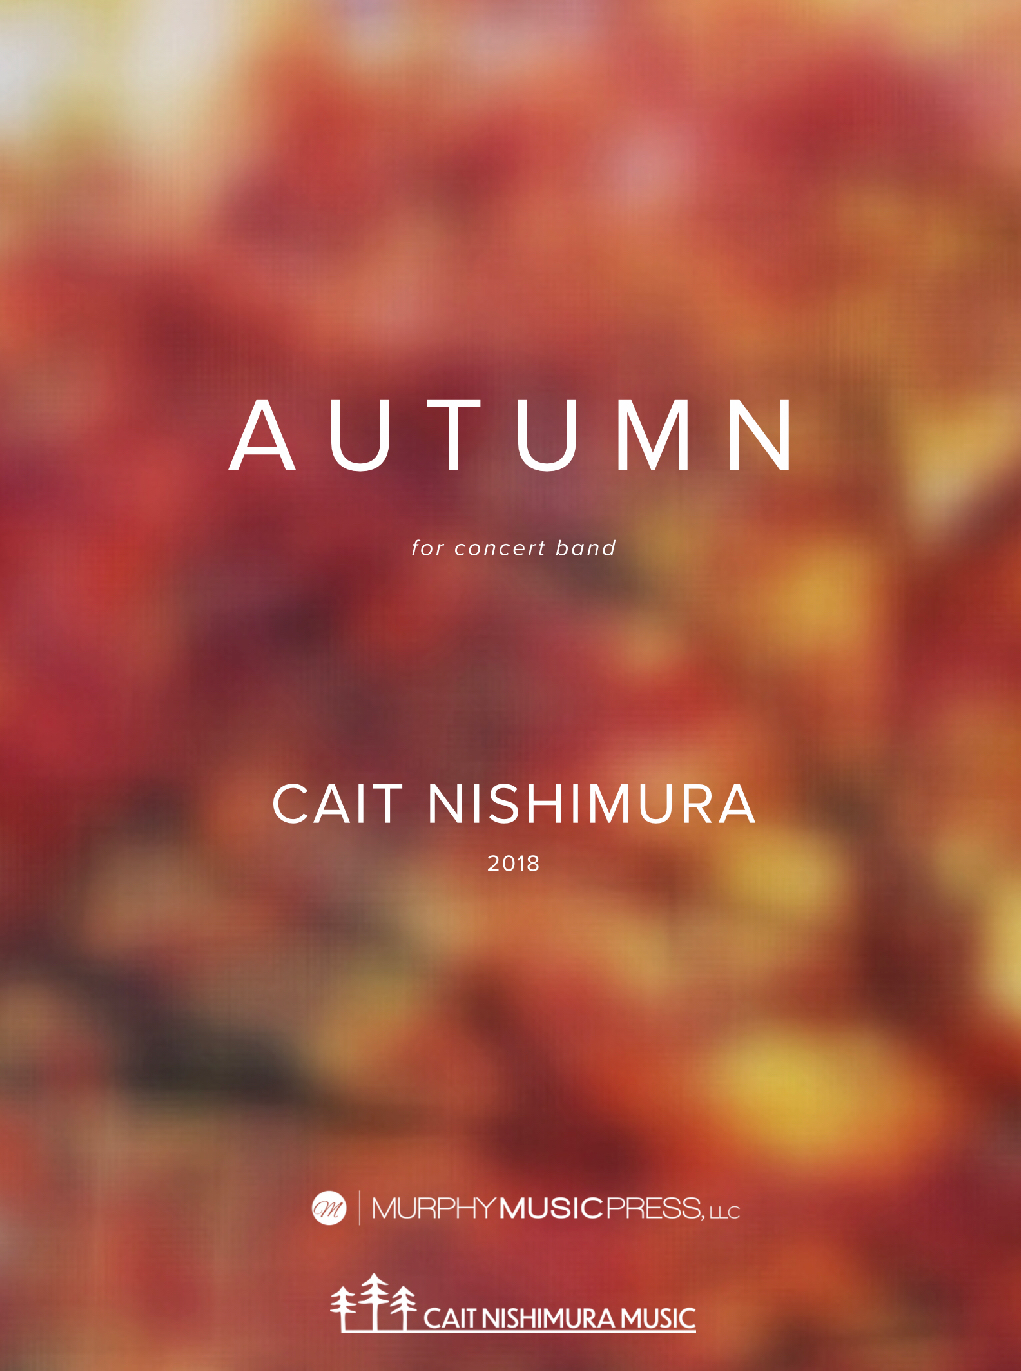 Autumn by Cait Nishimura